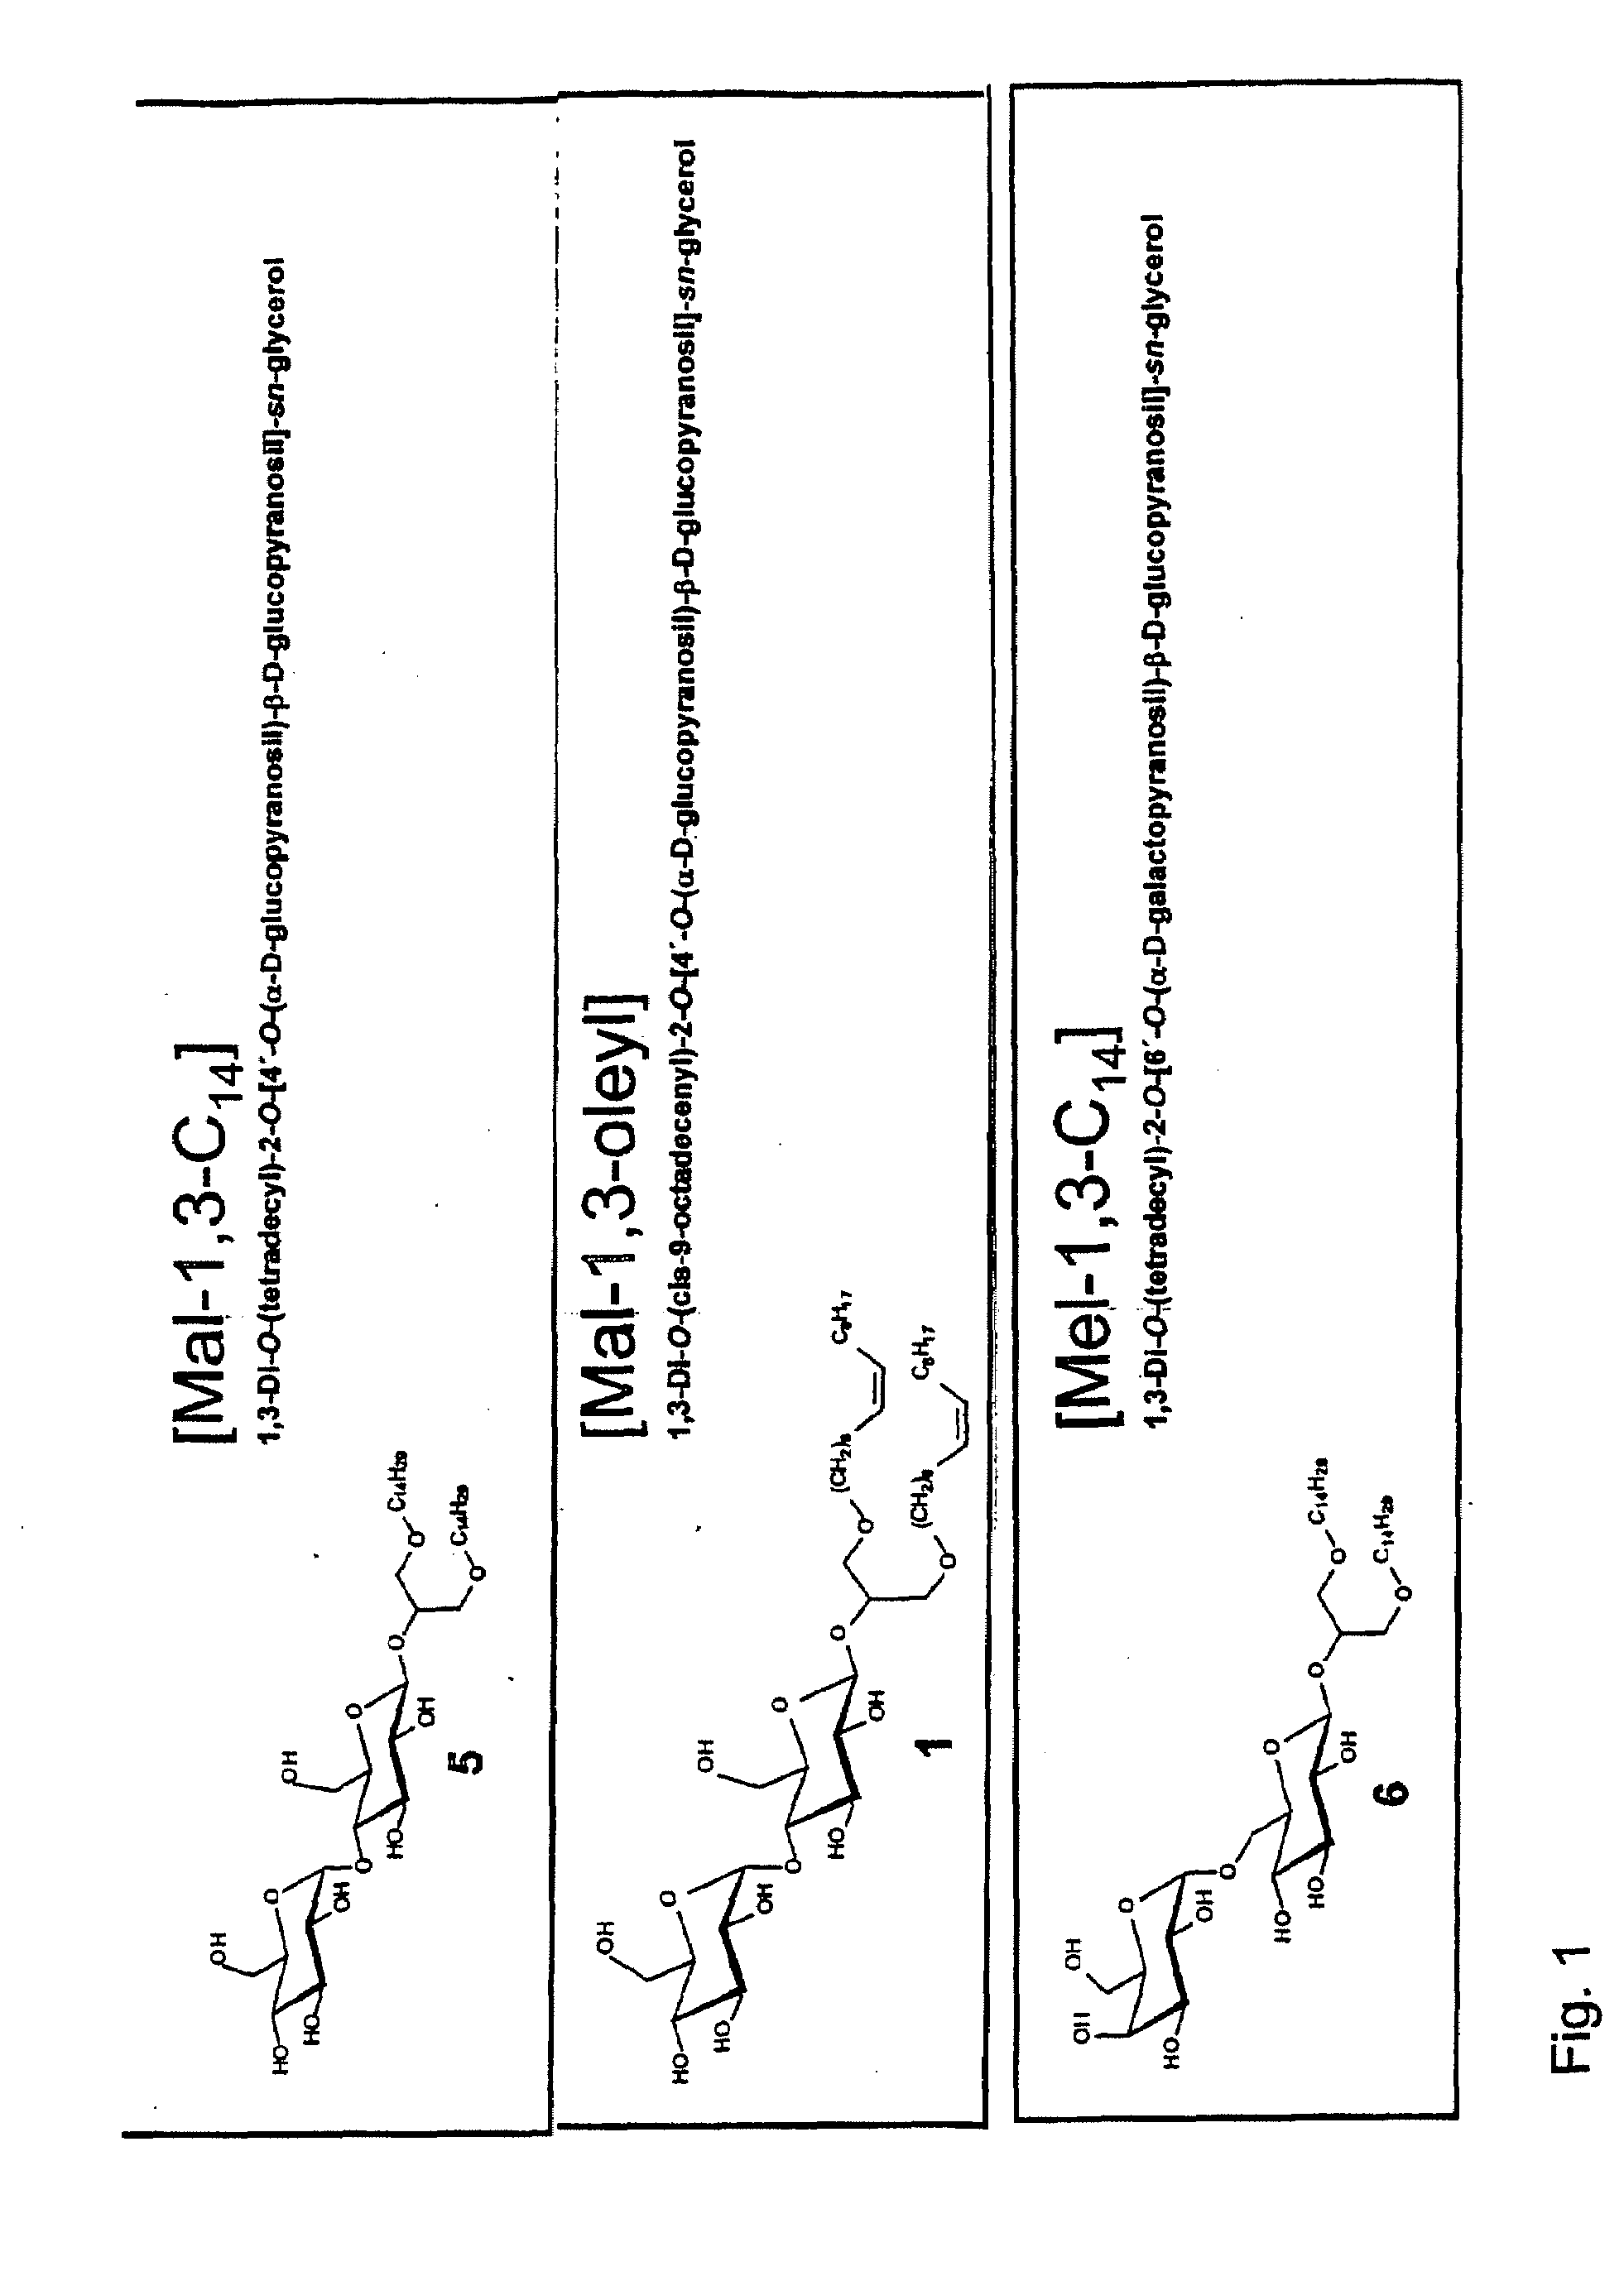 Use of Glycolipids as Adjuvants